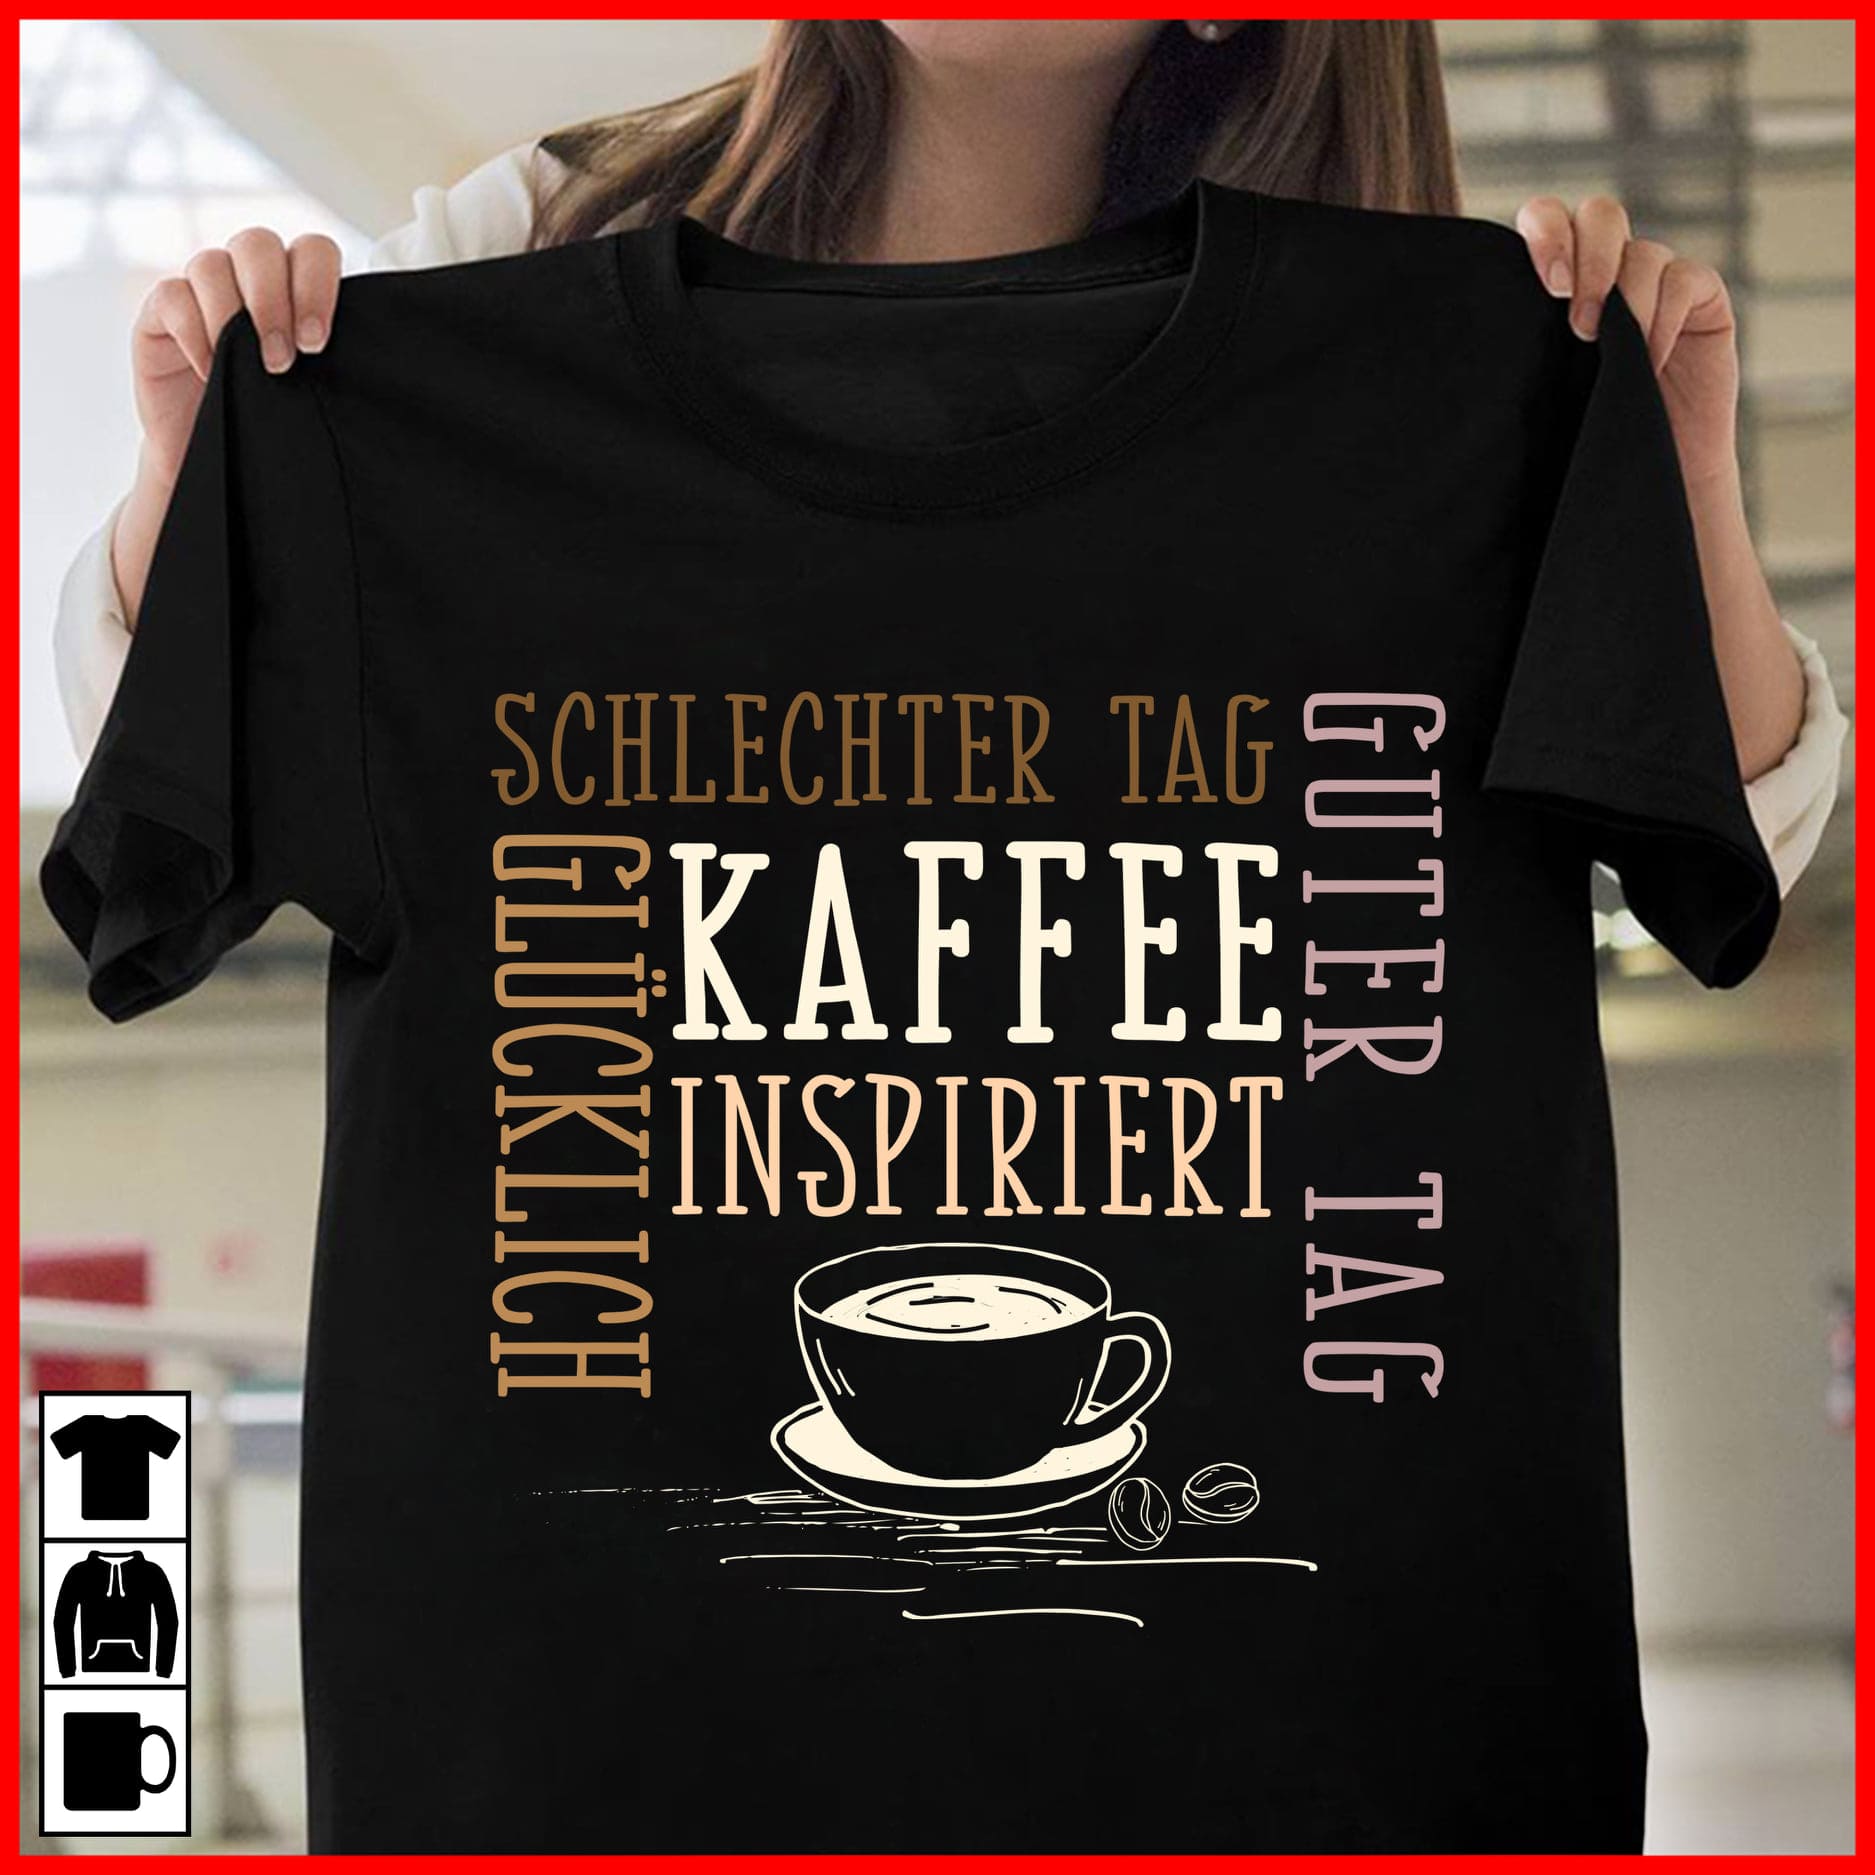 Cup Of Coffee - Schlechter tag guter tag glücklich kaffee inspiriert